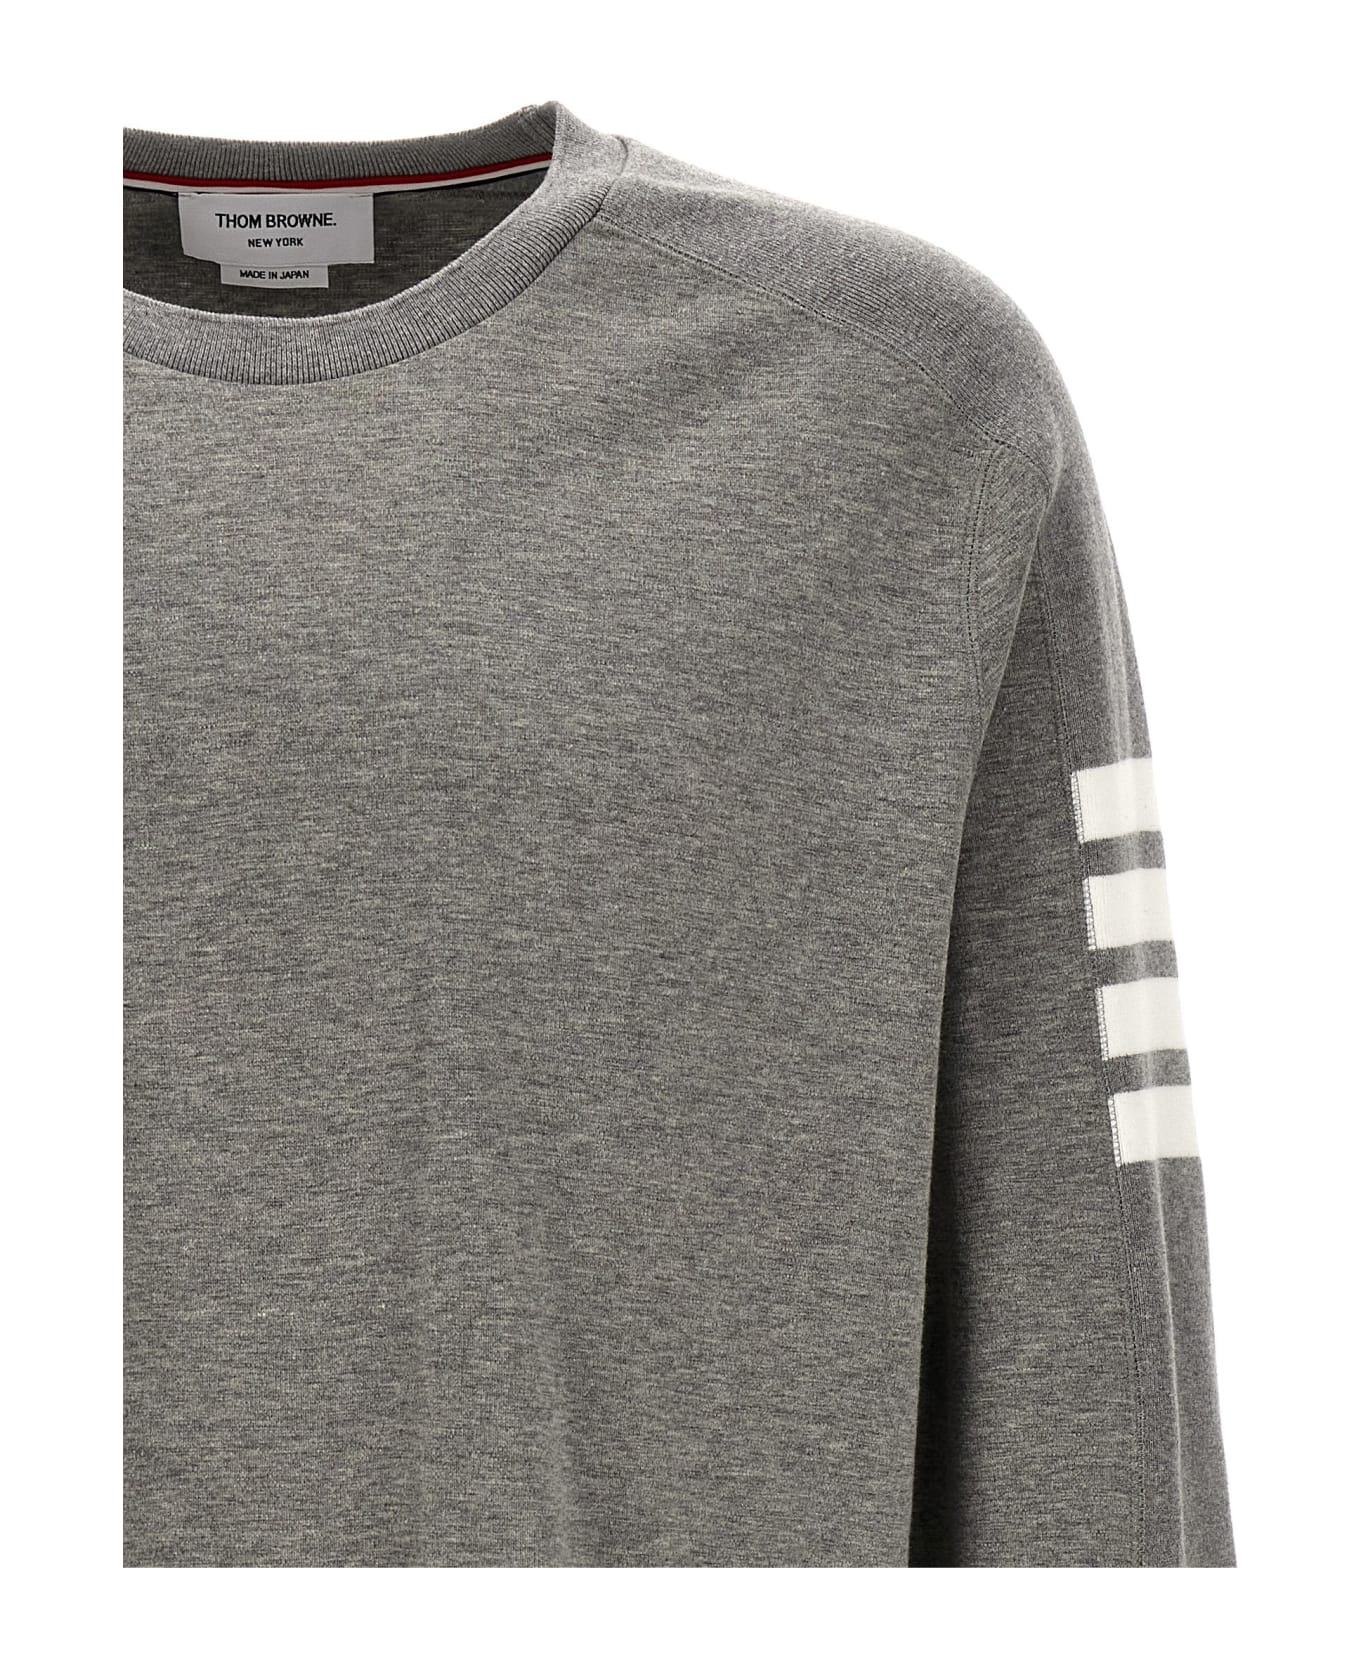 Thom Browne '4 Bar' T-shirt - Gray